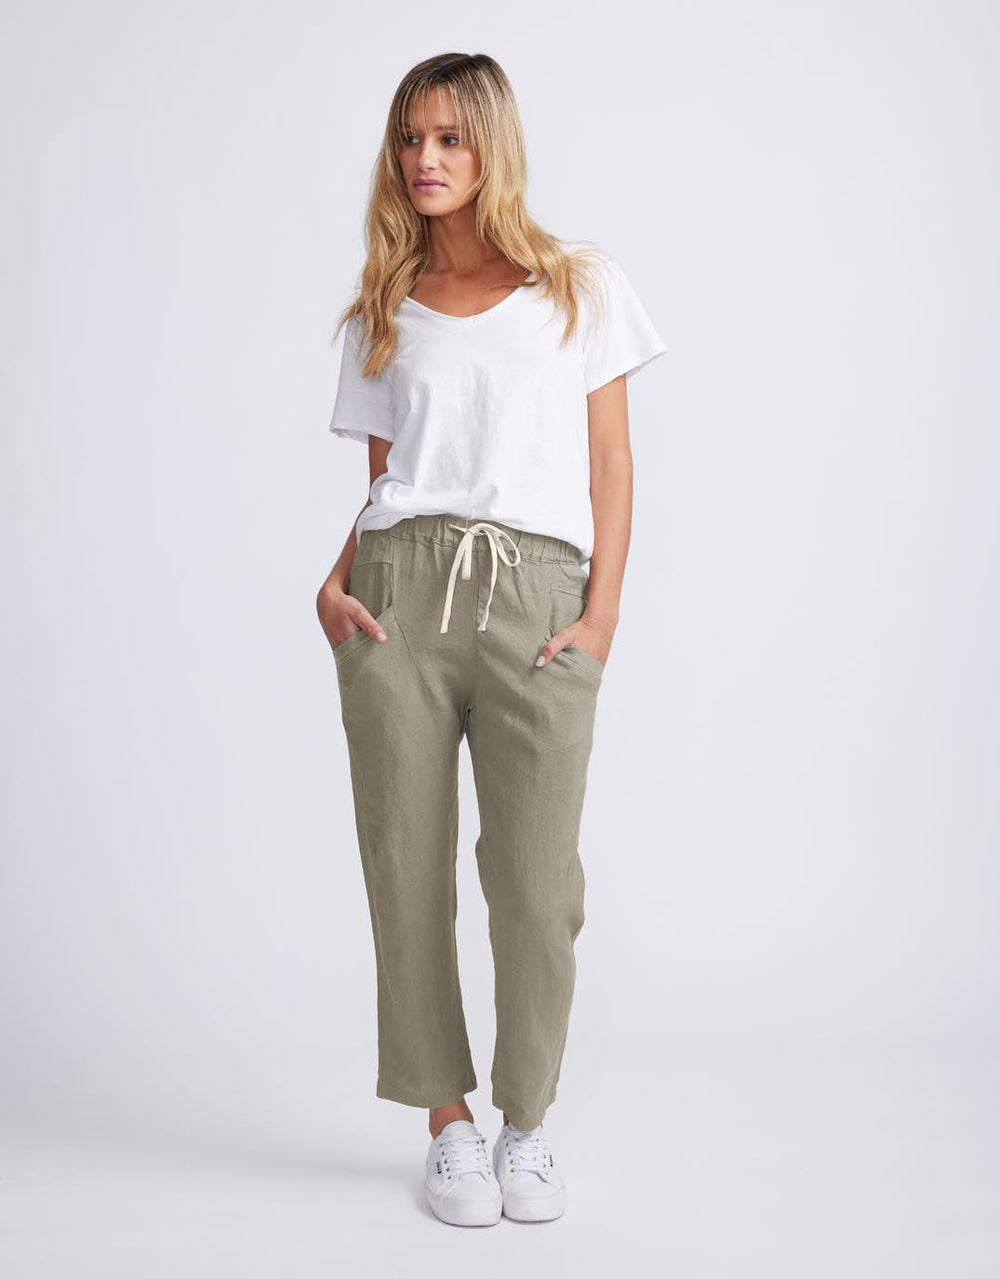 Womens Ladies Linen 3/4 Long Summer Shorts UK Size 10 12 14 16 18 Pants  Bottoms